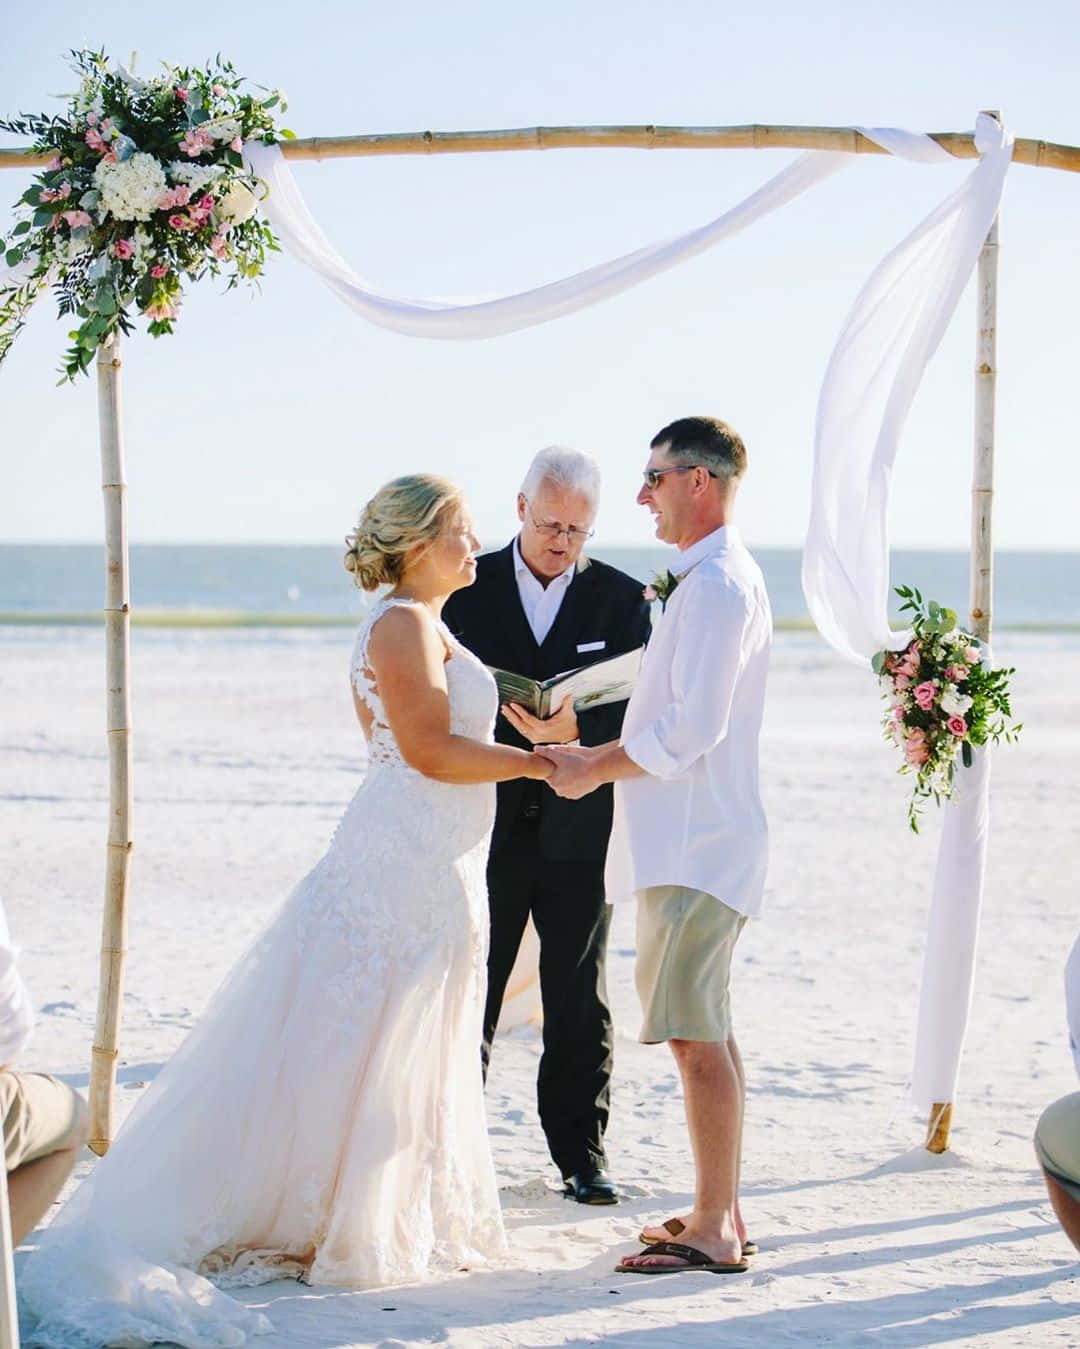 Tropical Love - An Intimate Beach Wedding